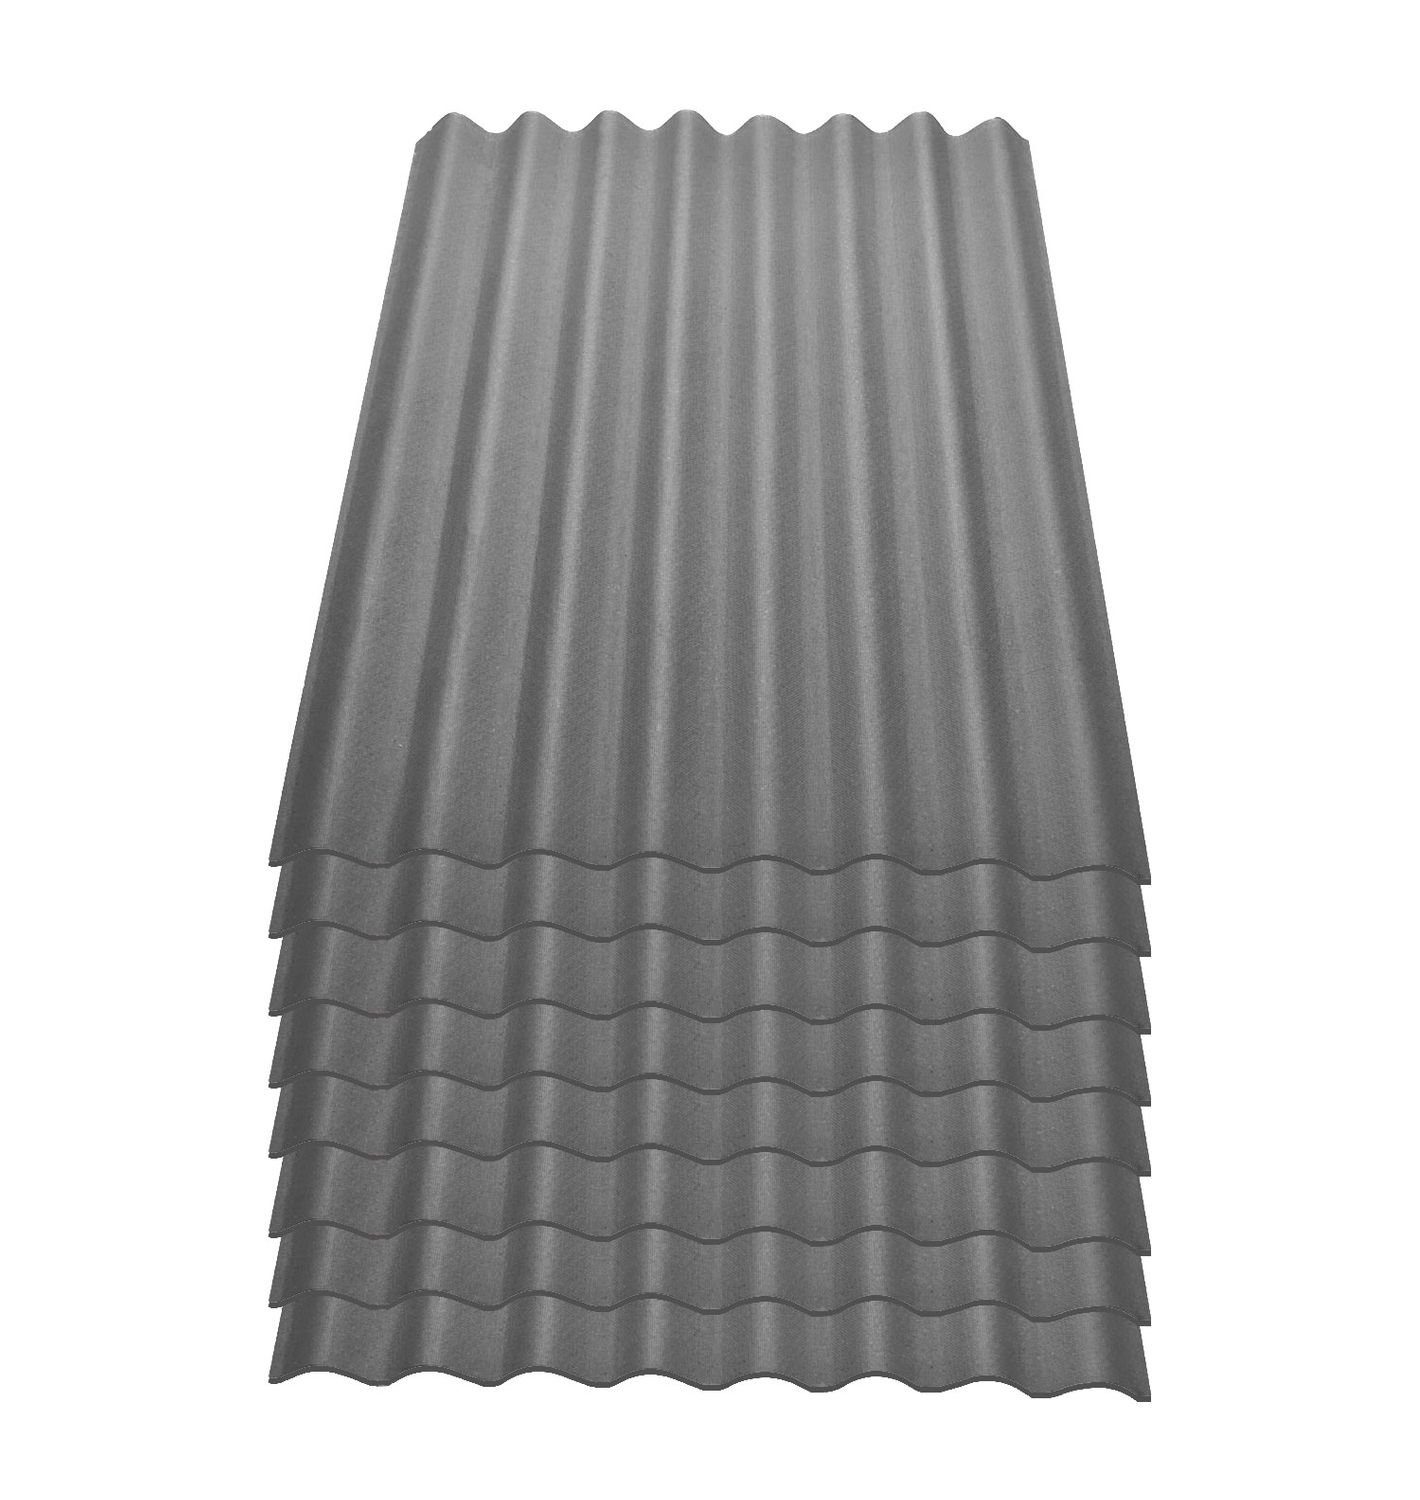 Onduline Dachpappe Onduline Easyline Dachplatte Wandplatte Bitumenwellplatten Wellplatte 8x0,76m² - grau, wellig, 6.08 m² pro Paket, (8-St)